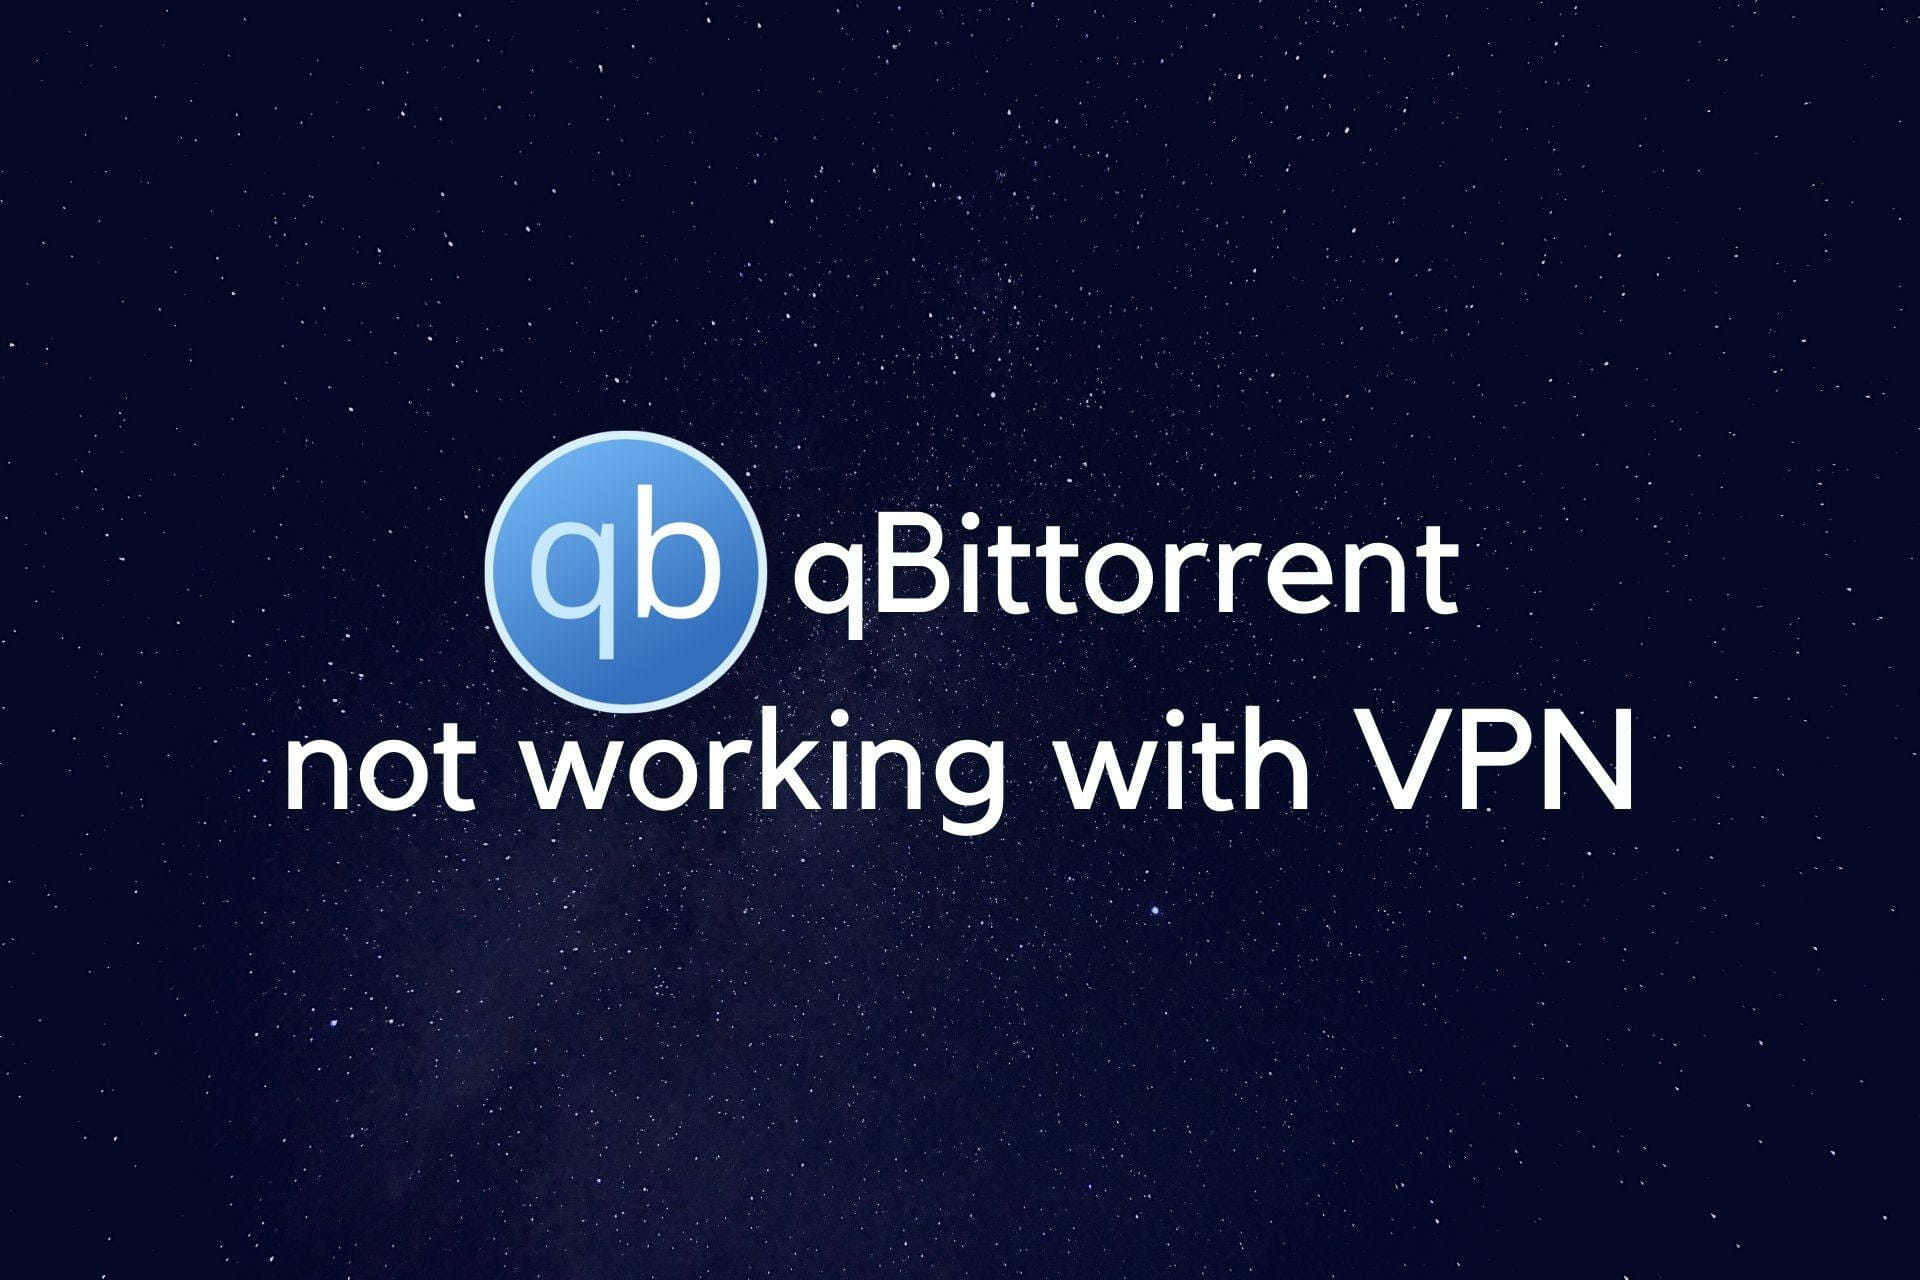 qBittorrent not working with VPN